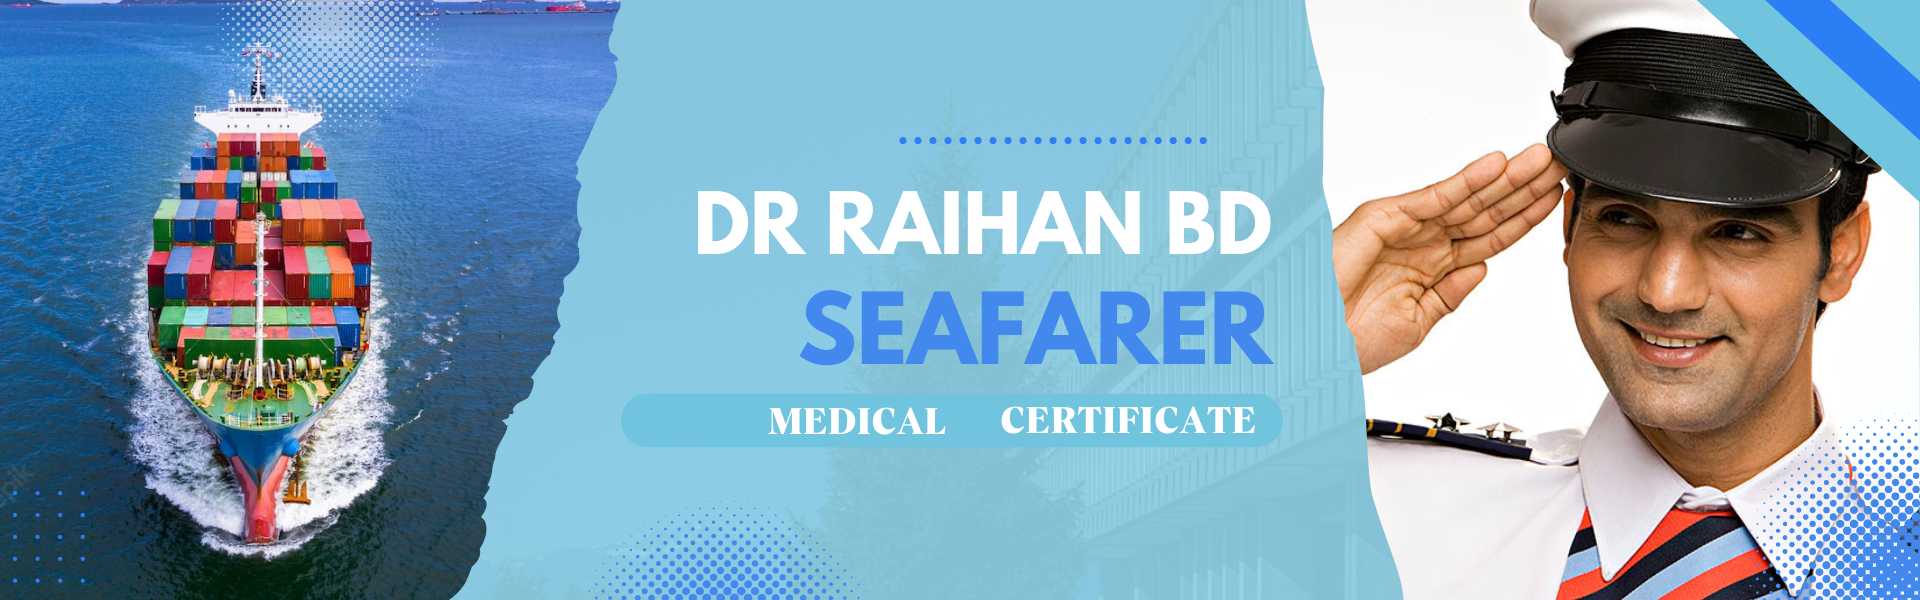 Dr Raihan BD Front Page Banner (1)